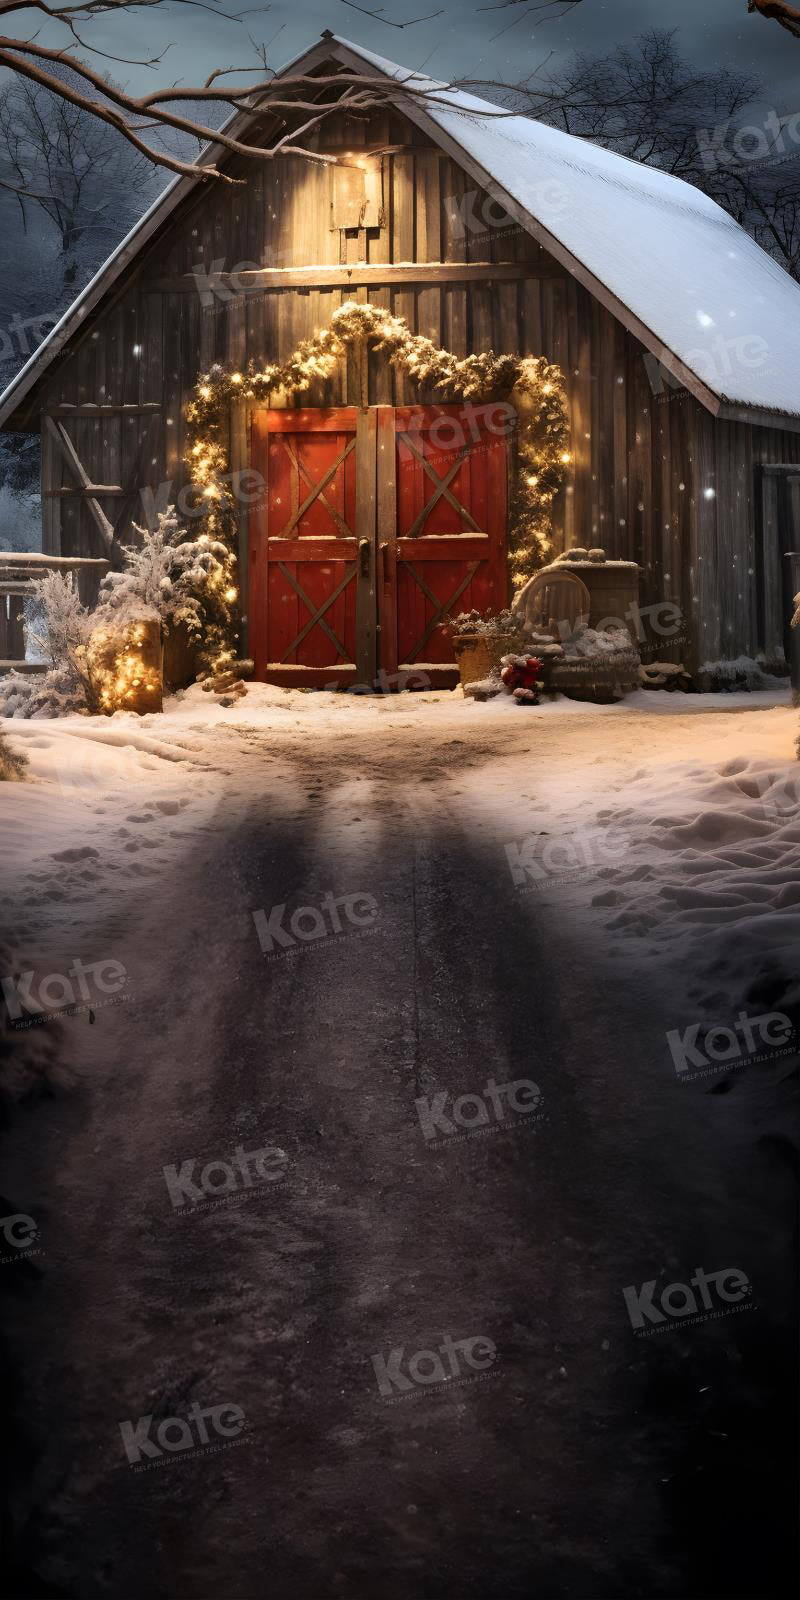 Kate Sweep Christmas Way to Red Barn Night Backdrop for Photography